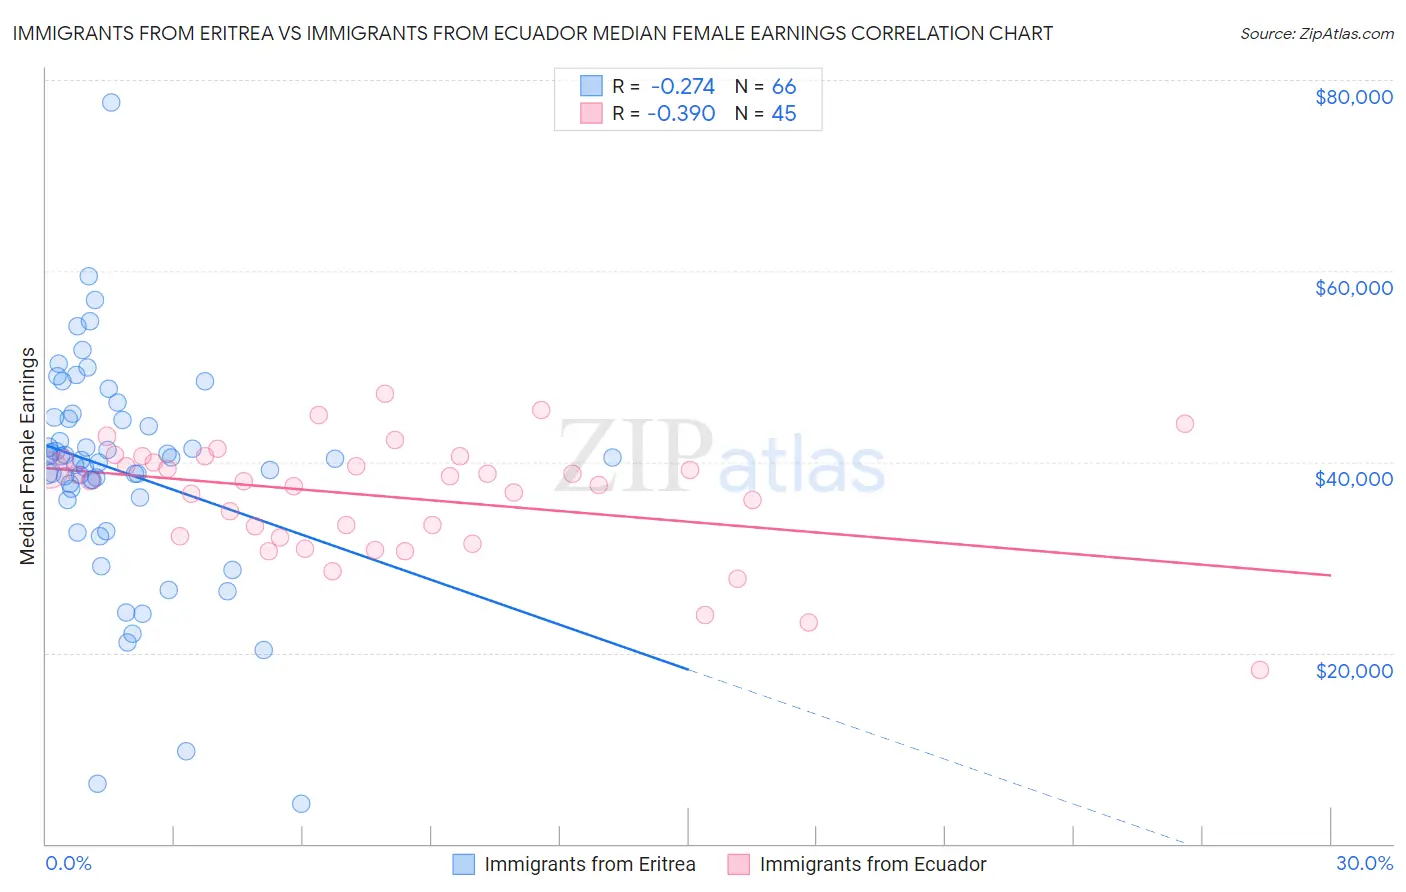 Immigrants from Eritrea vs Immigrants from Ecuador Median Female Earnings